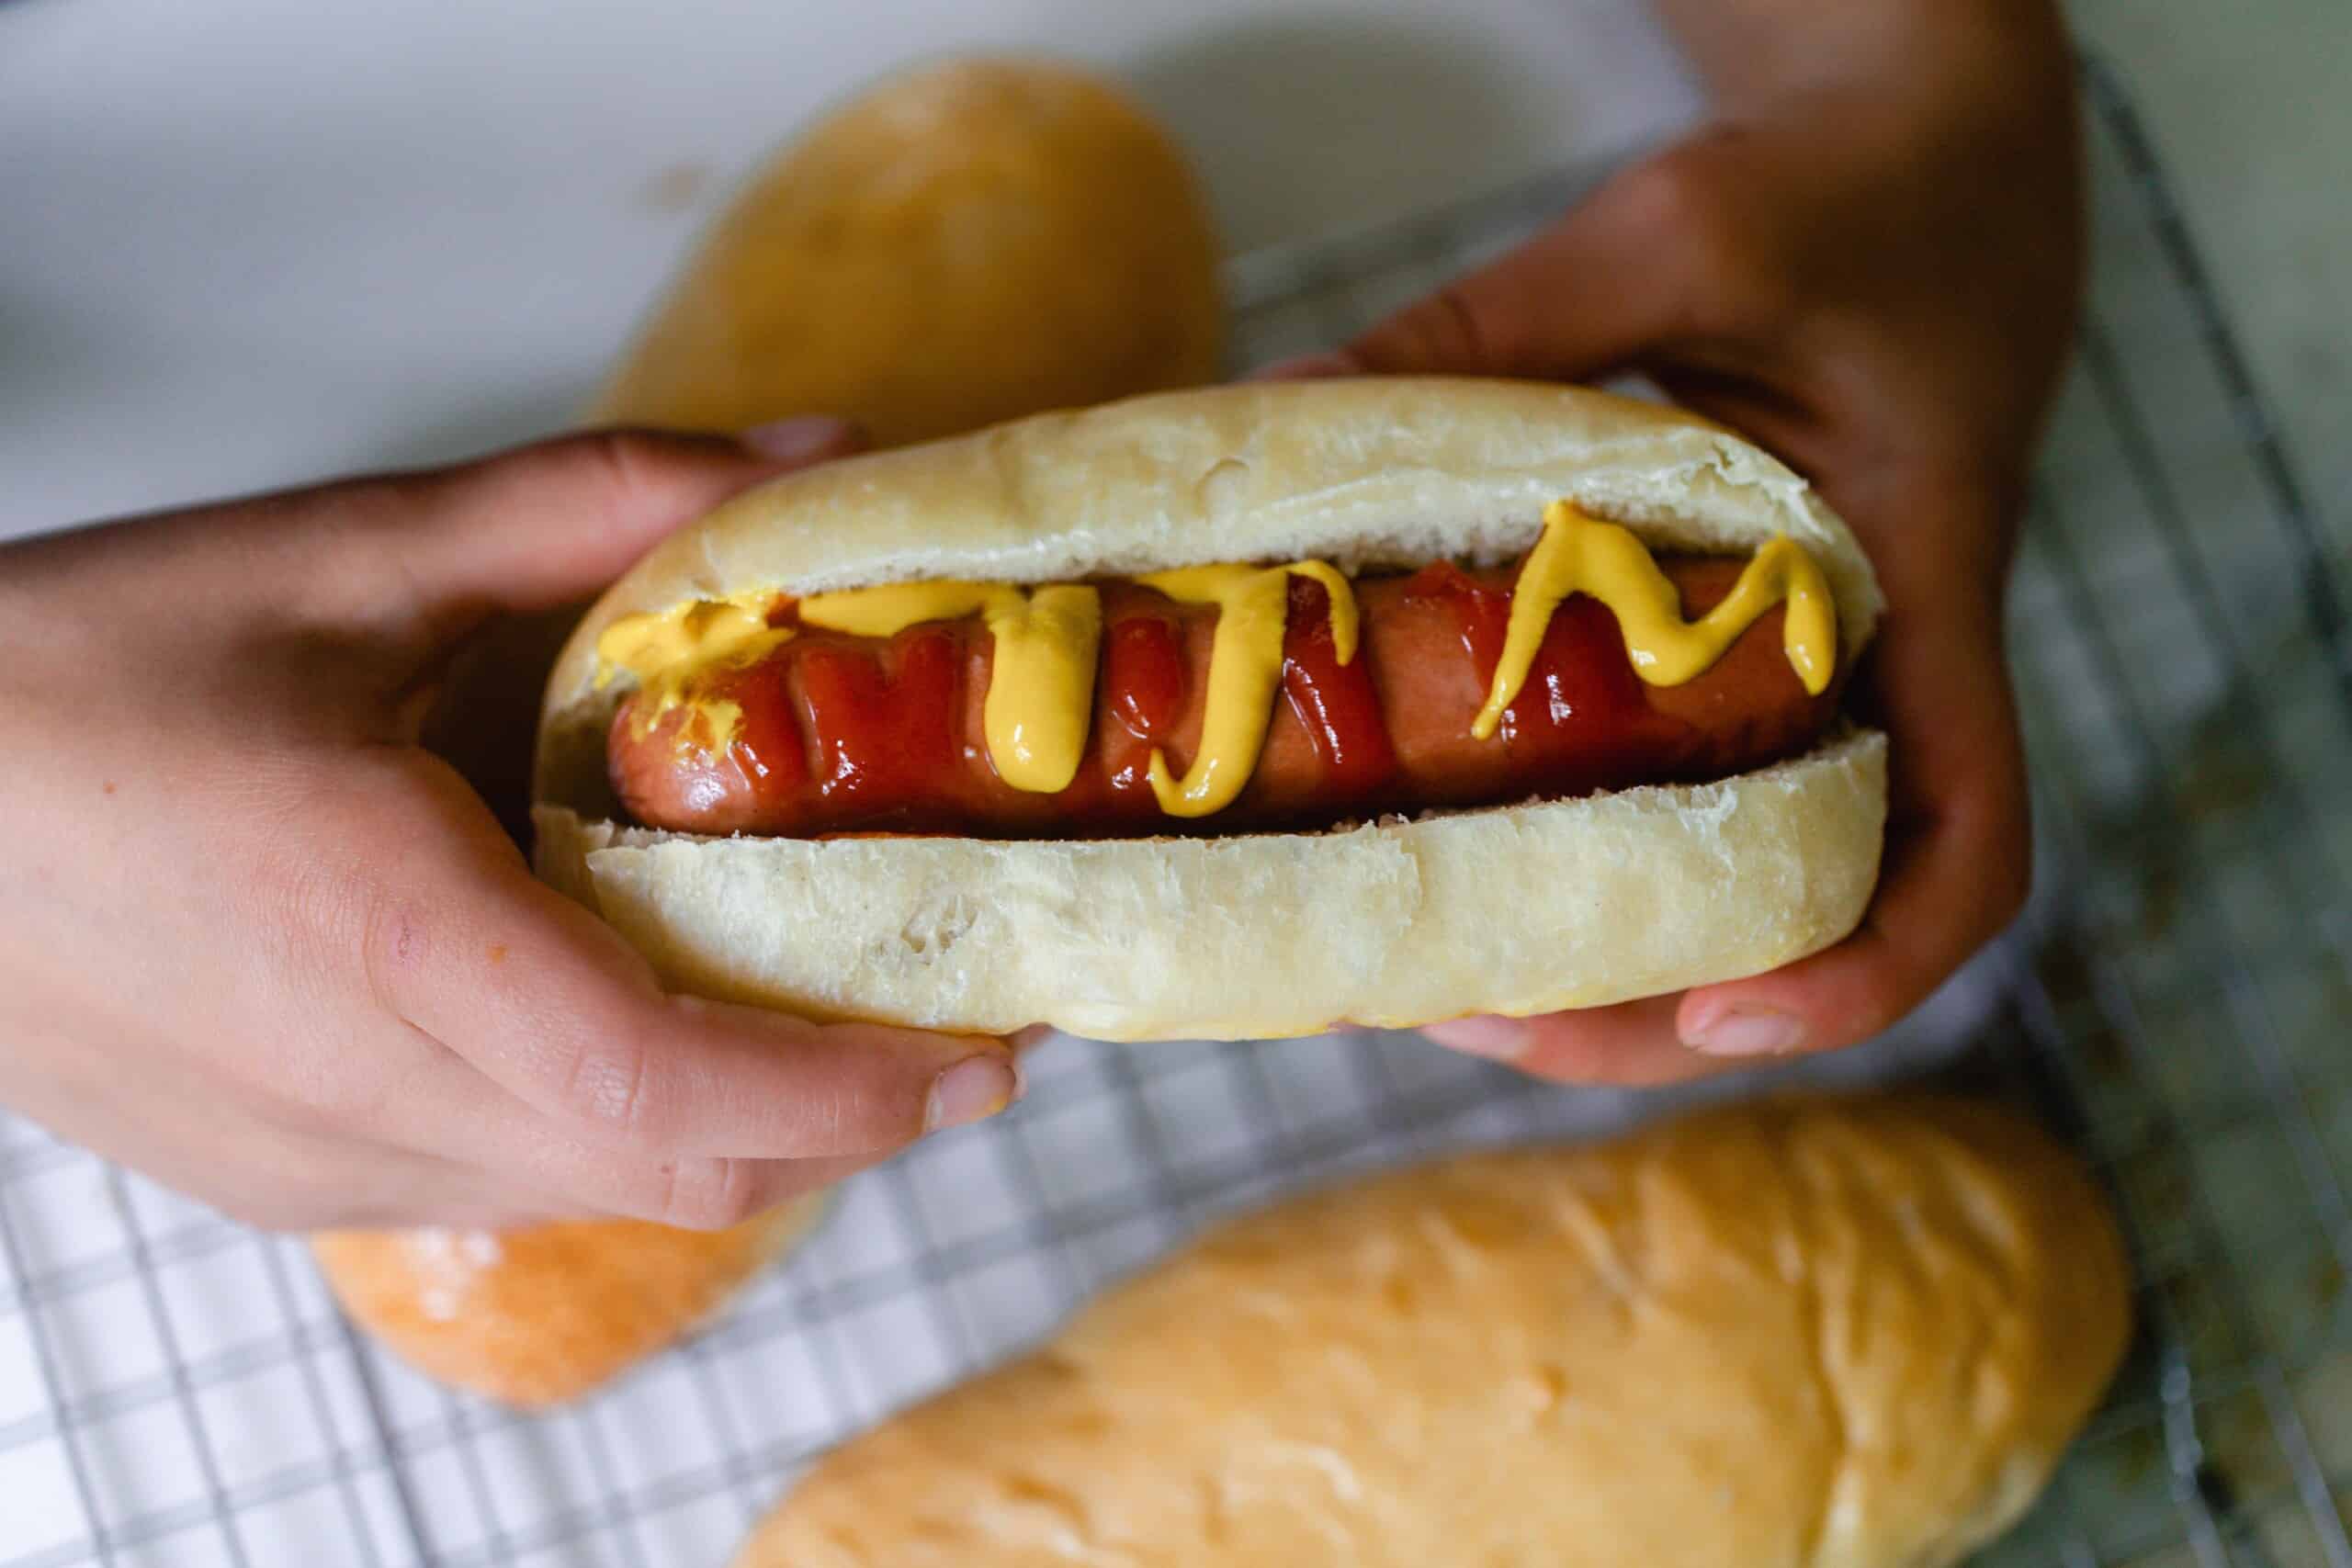 wiener dog in a hot dog bun